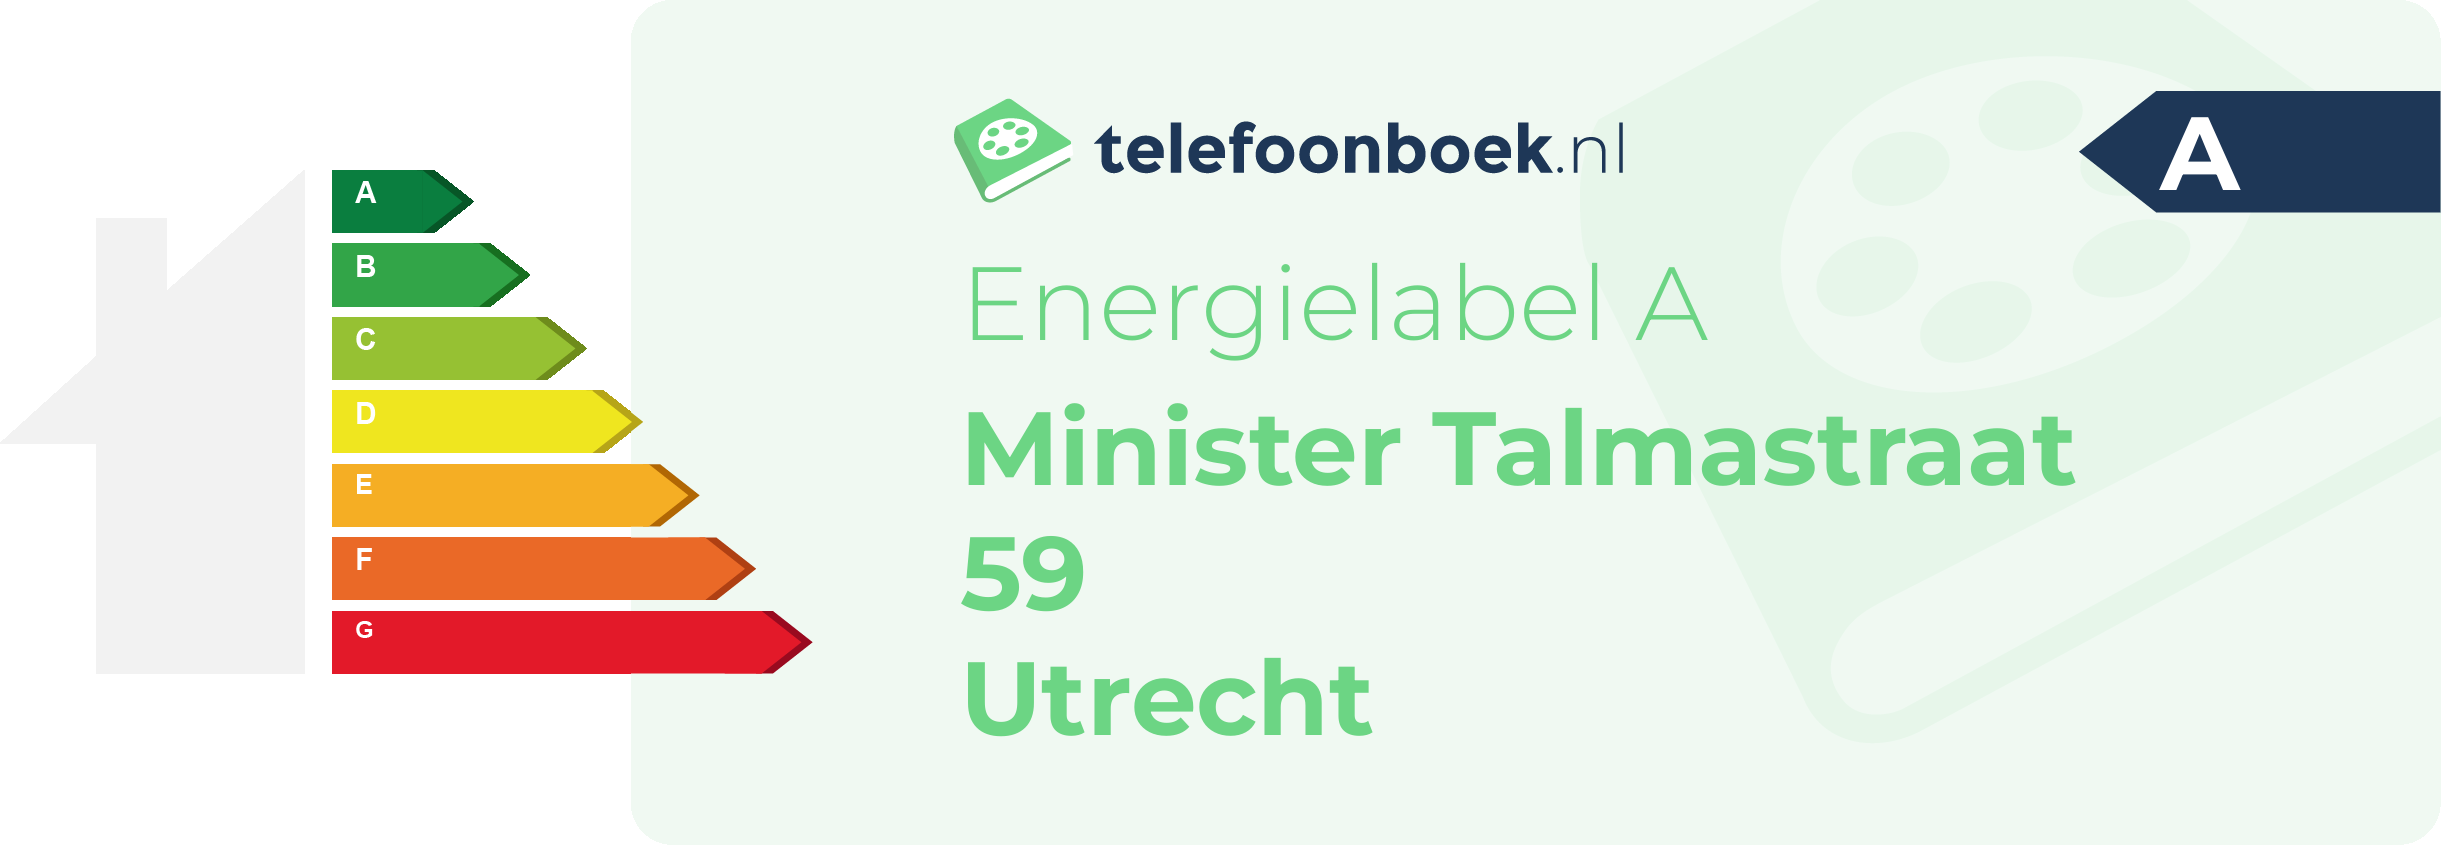 Energielabel Minister Talmastraat 59 Utrecht